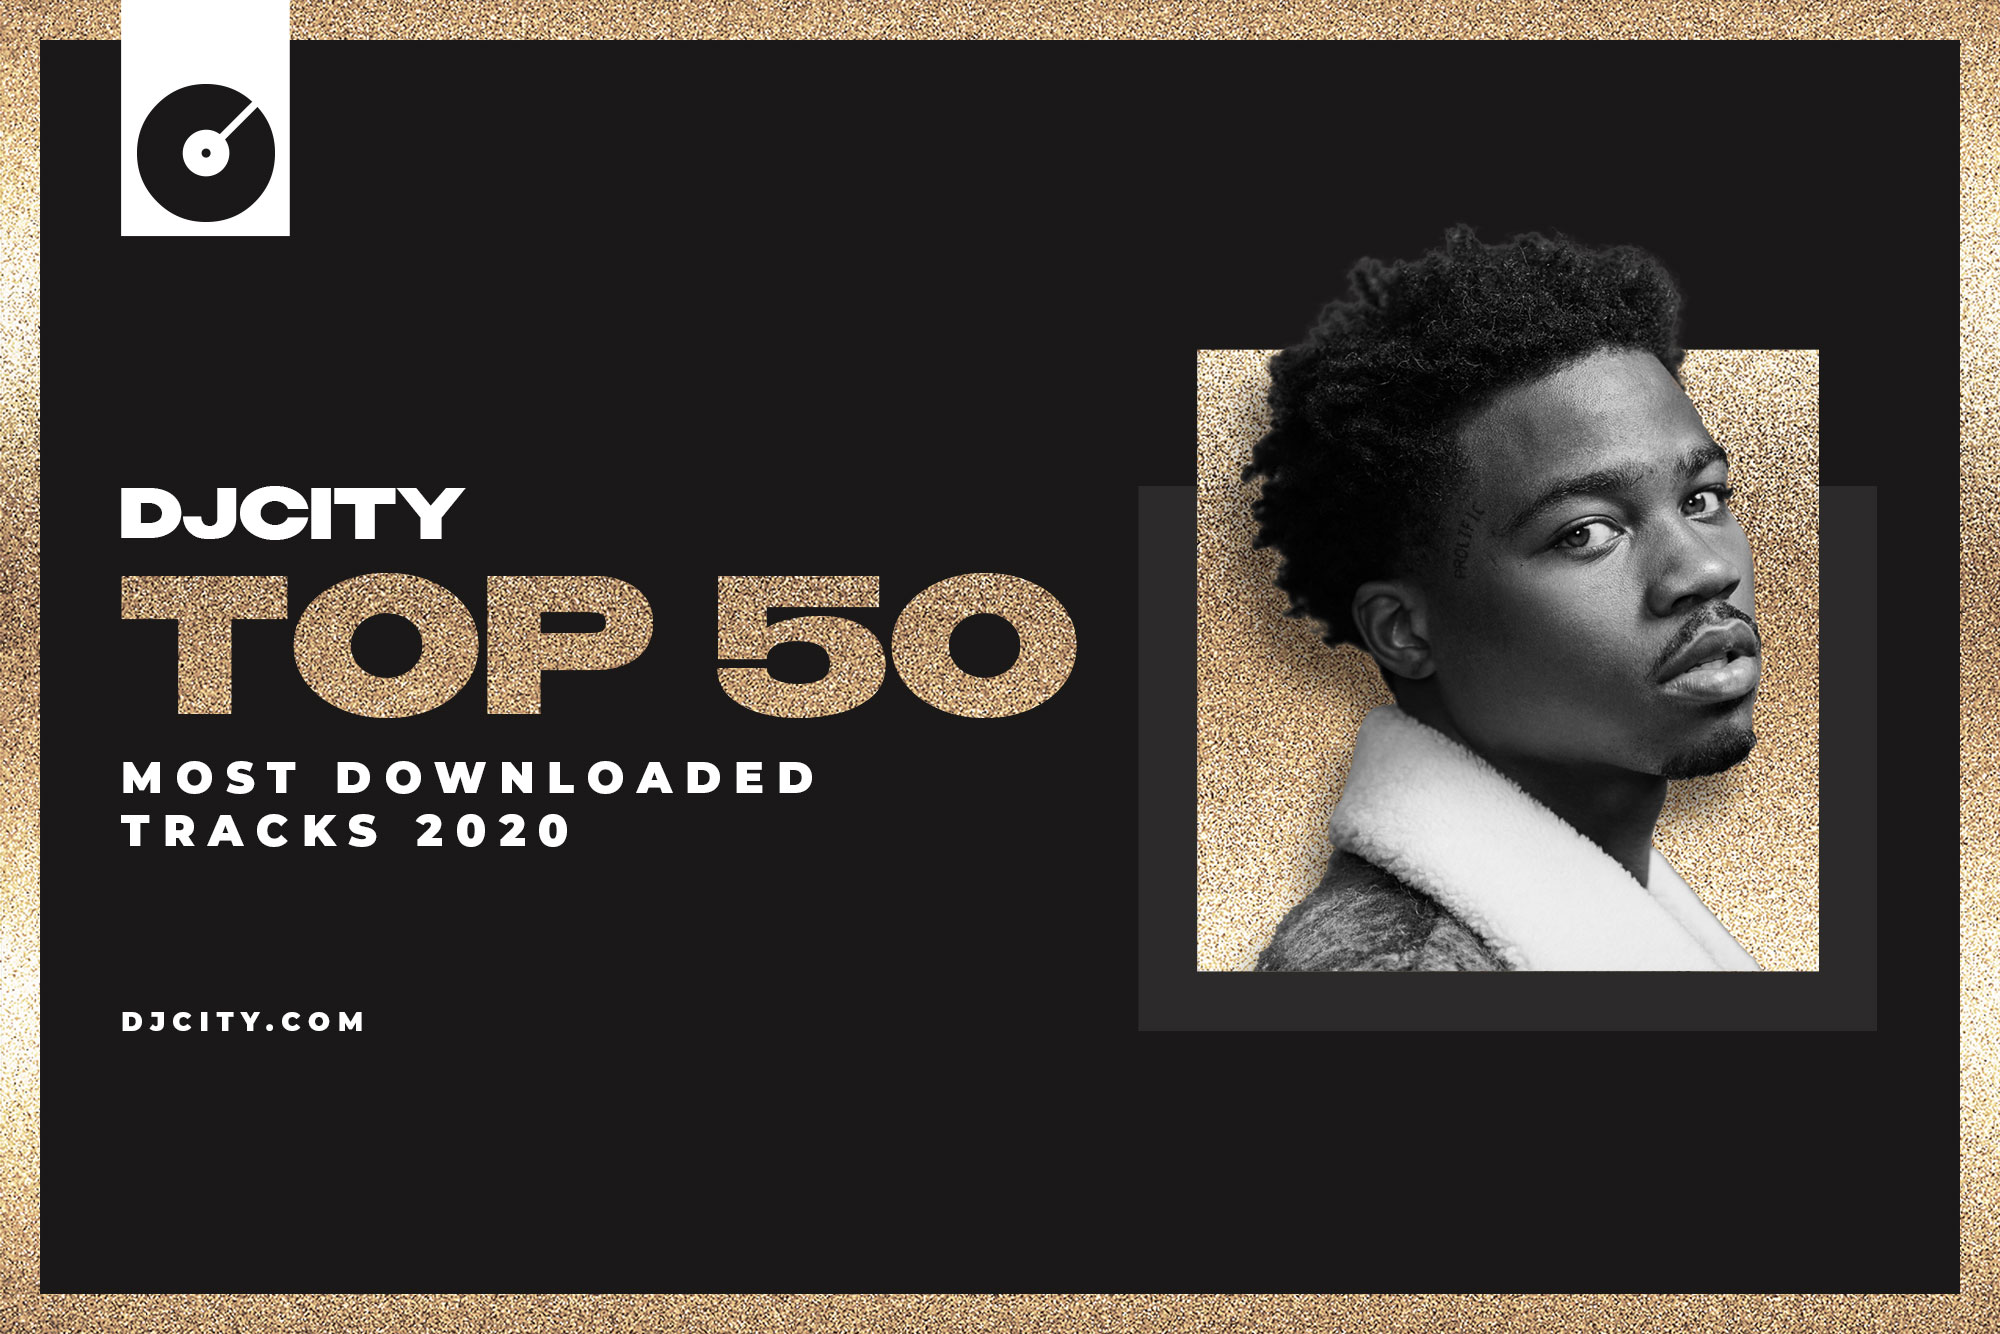 DJcity’s 50 Most Downloaded Tracks in 2020